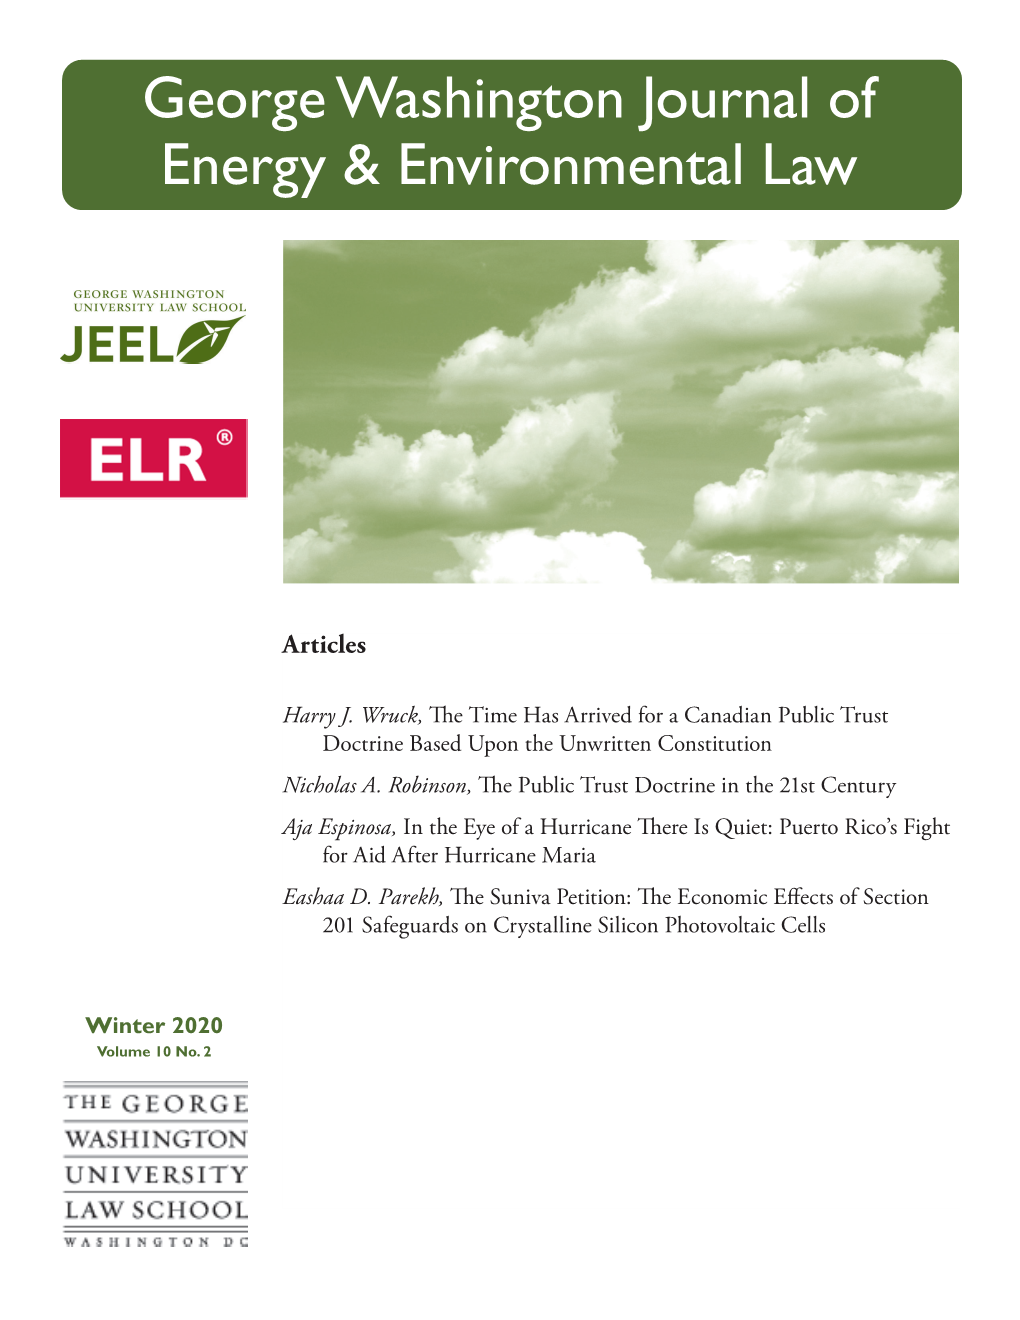 George Washington Journal of Energy & Environmental